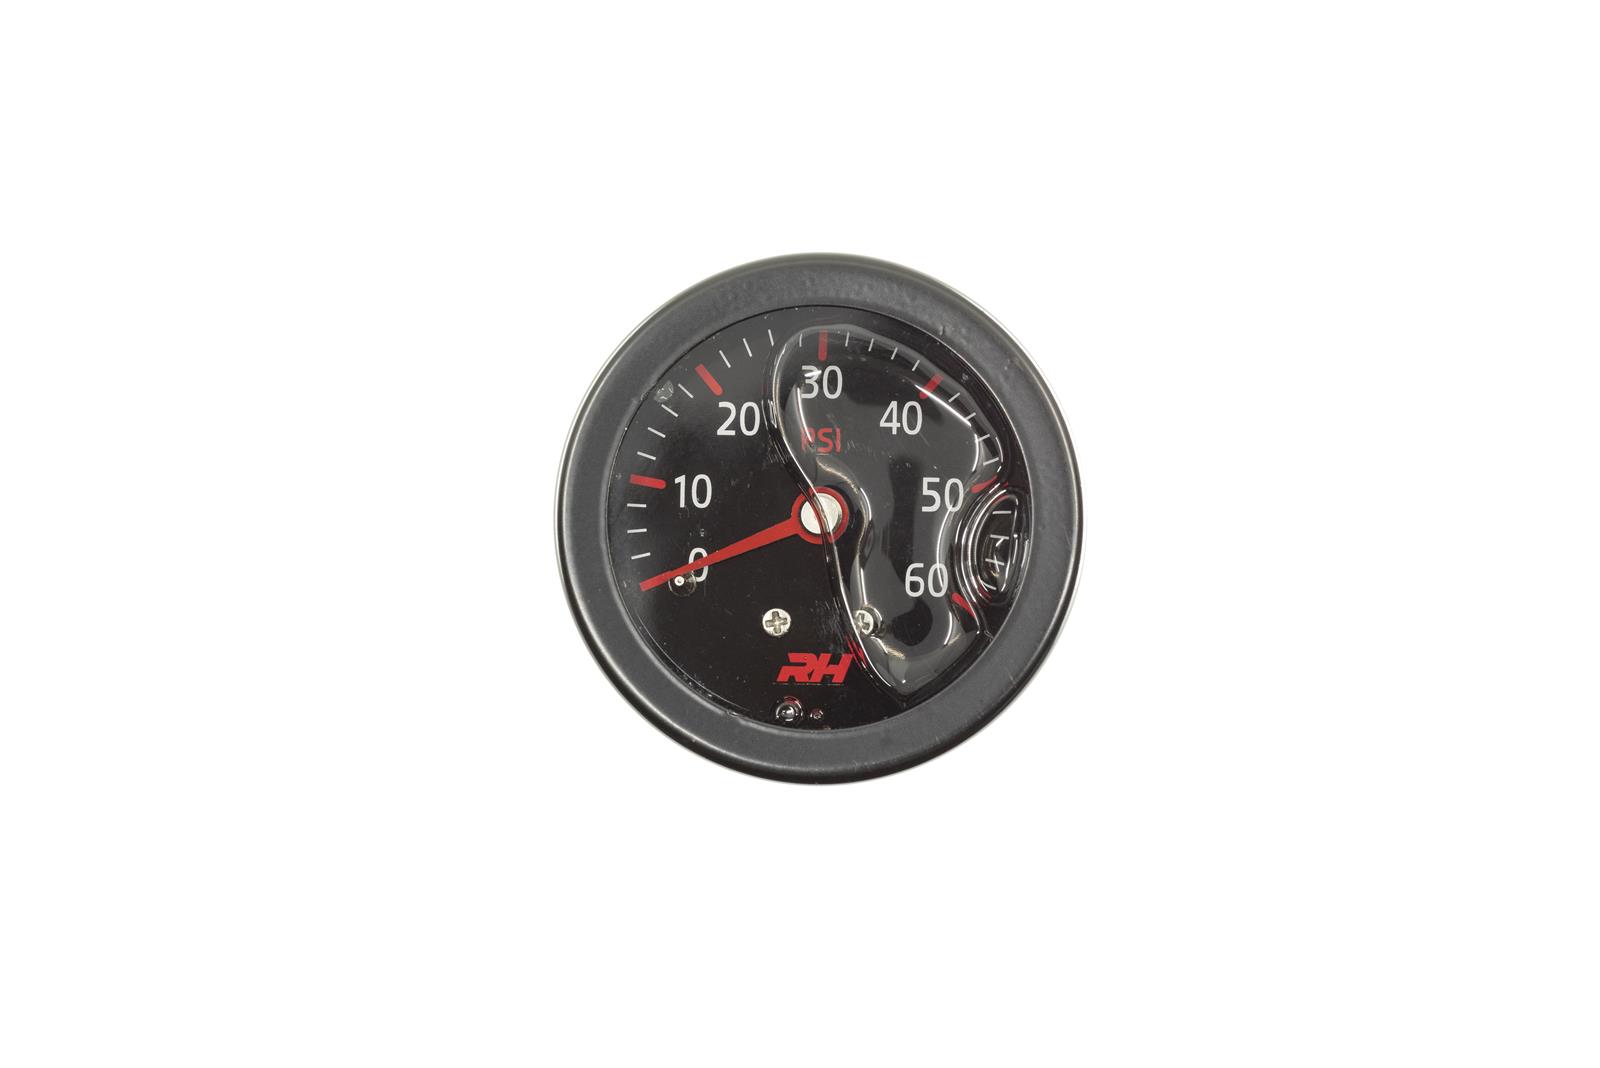 Redhorse Performance 5002-60-3 Liquid Filled Fuel Pressure Gauge - 1/8in NPT Inlet - 60psi - All Black Finish